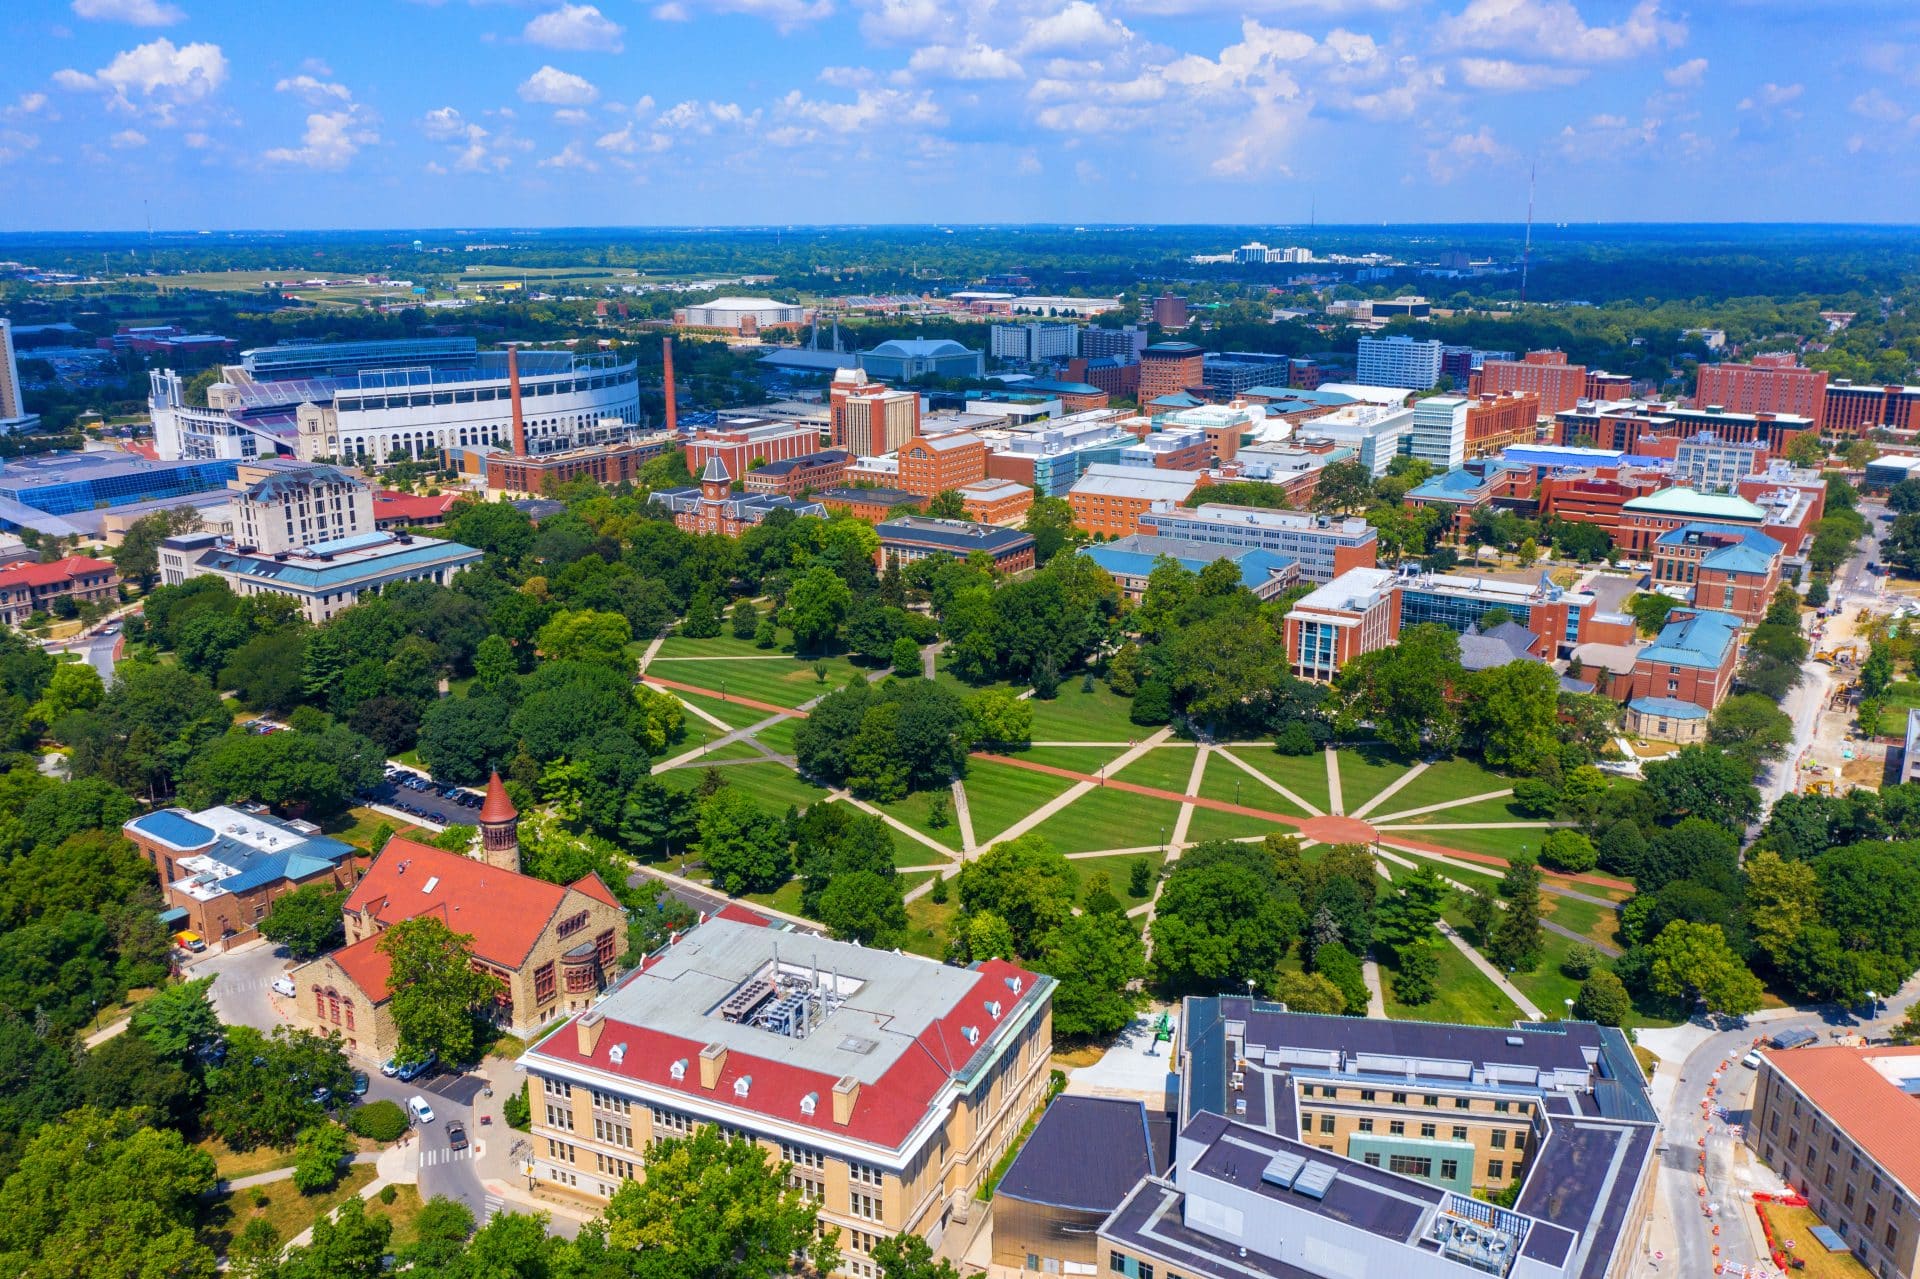 VERVE Columbus Ohio State University student apartments aerial view